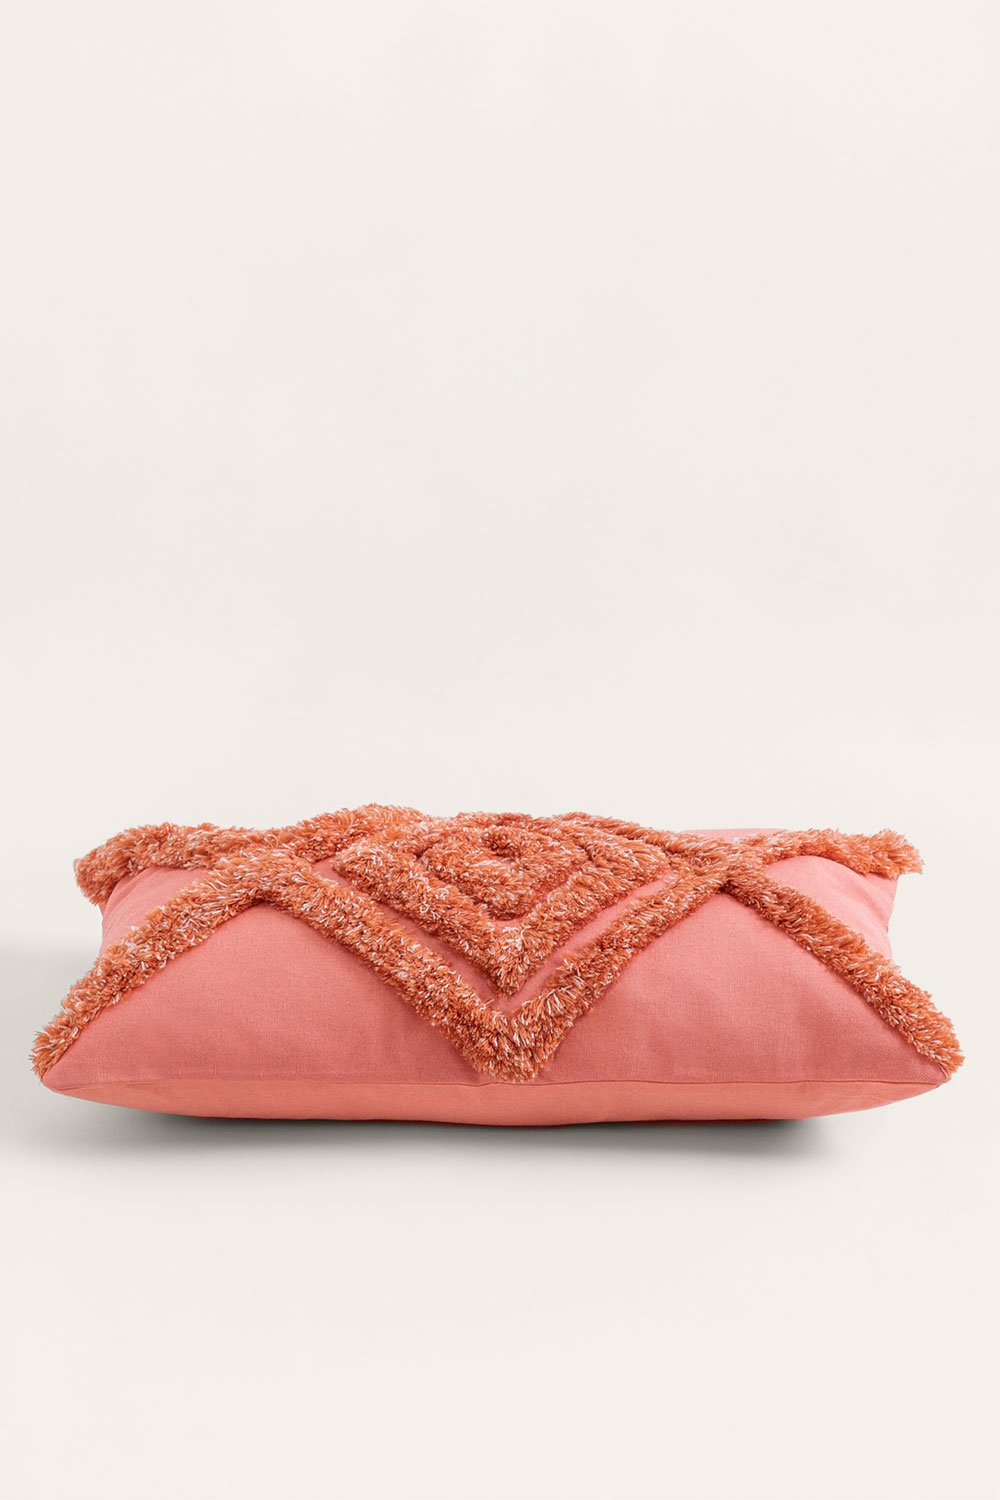 Rectangular Cotton Cushion (30 x 50 cm) Takker Style, gallery image 2